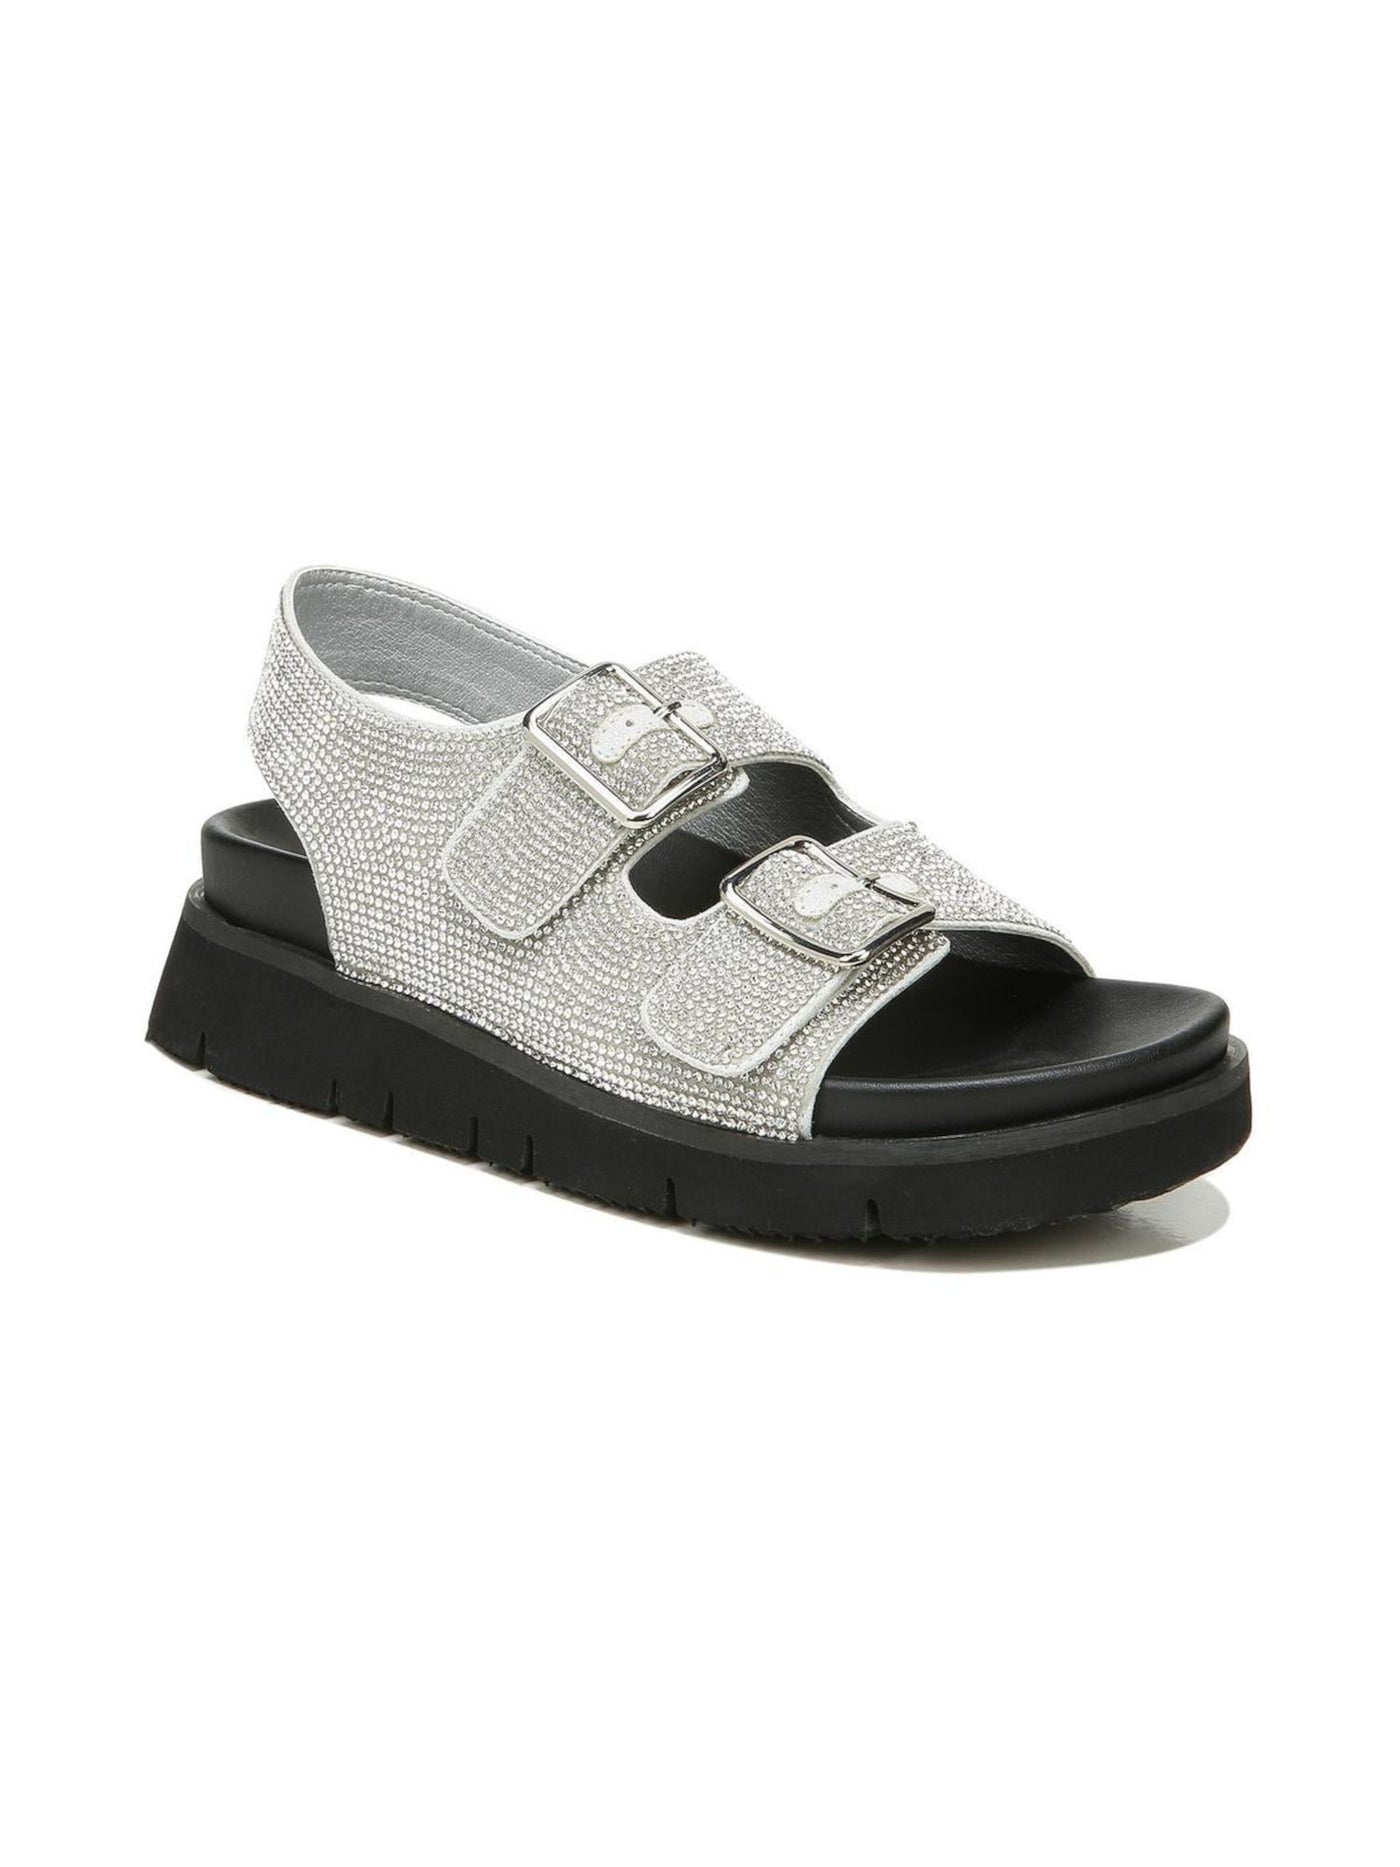 BAR III Womens Silver Sport Embellished Adjustable Kiwi Round Toe Buckle Sandals Shoes 6.5 M